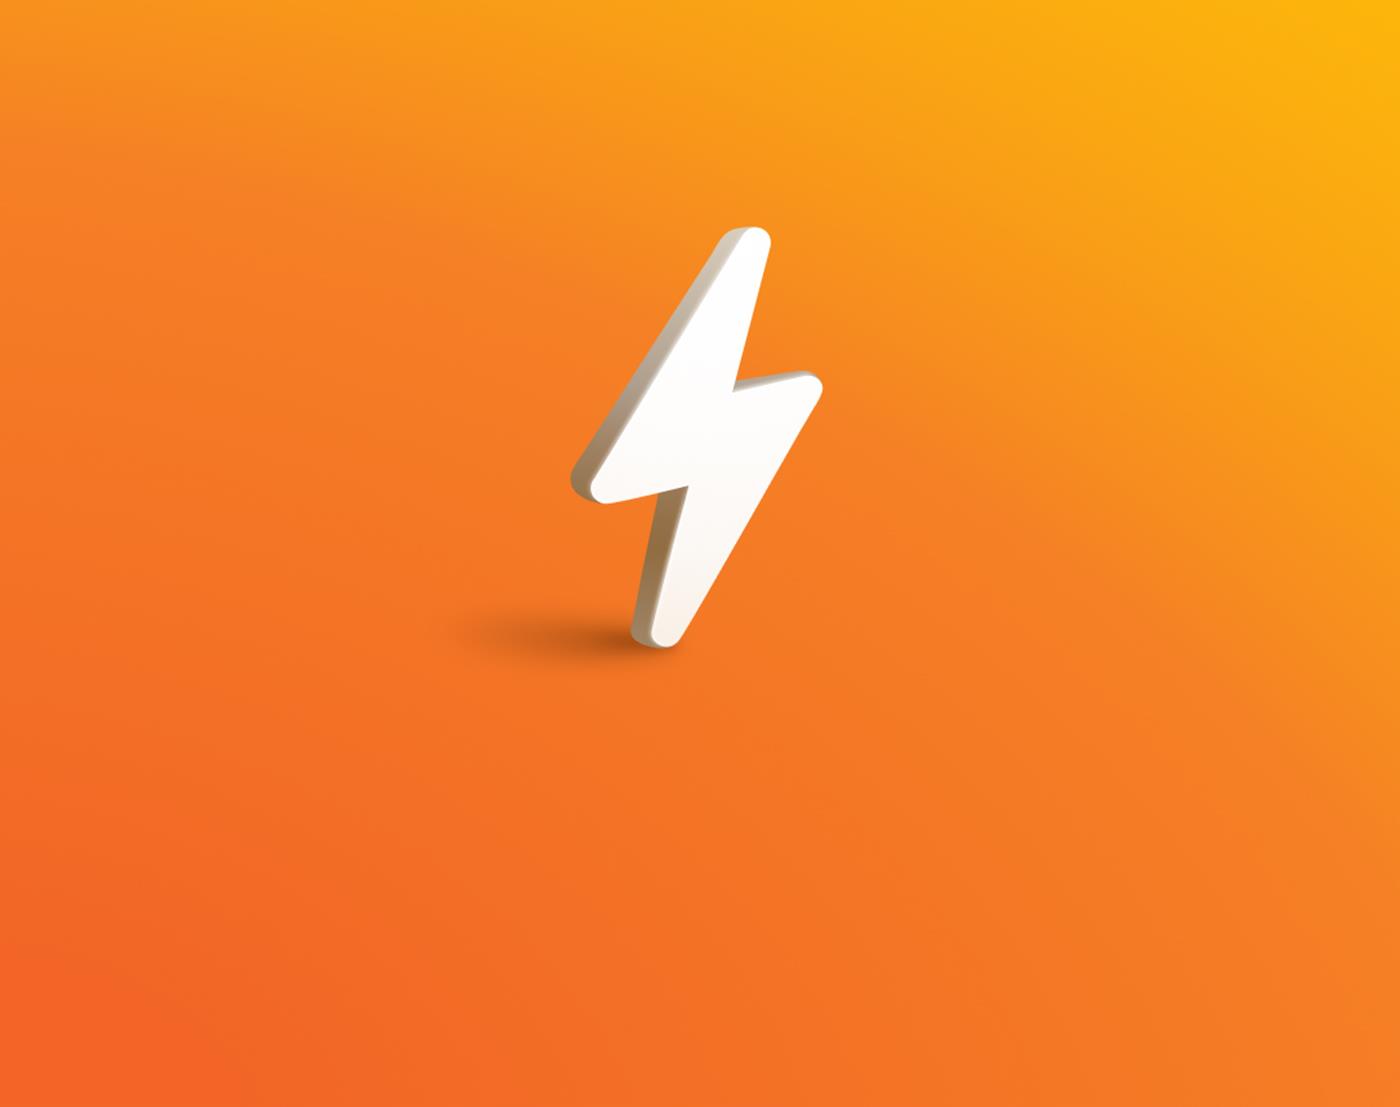 Lightning bolt electricity icon